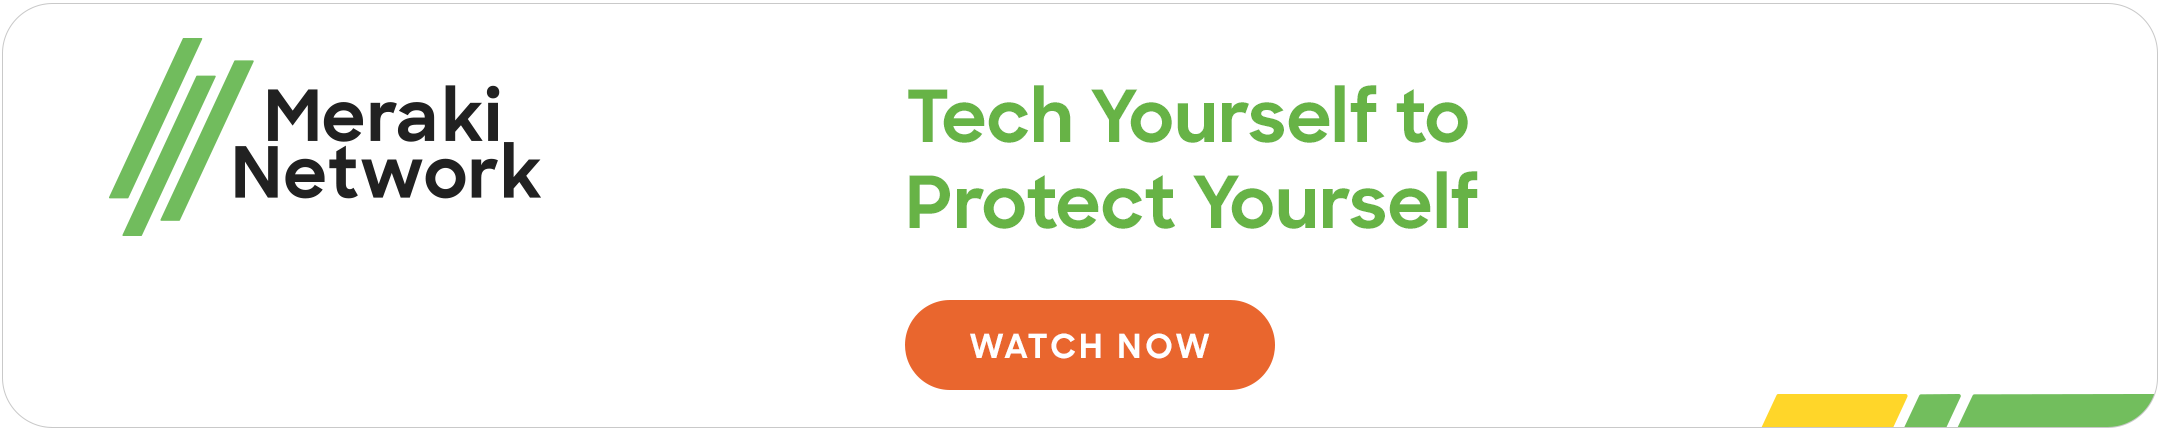 Meraki Network: Tech Yourself to Protect Yourself